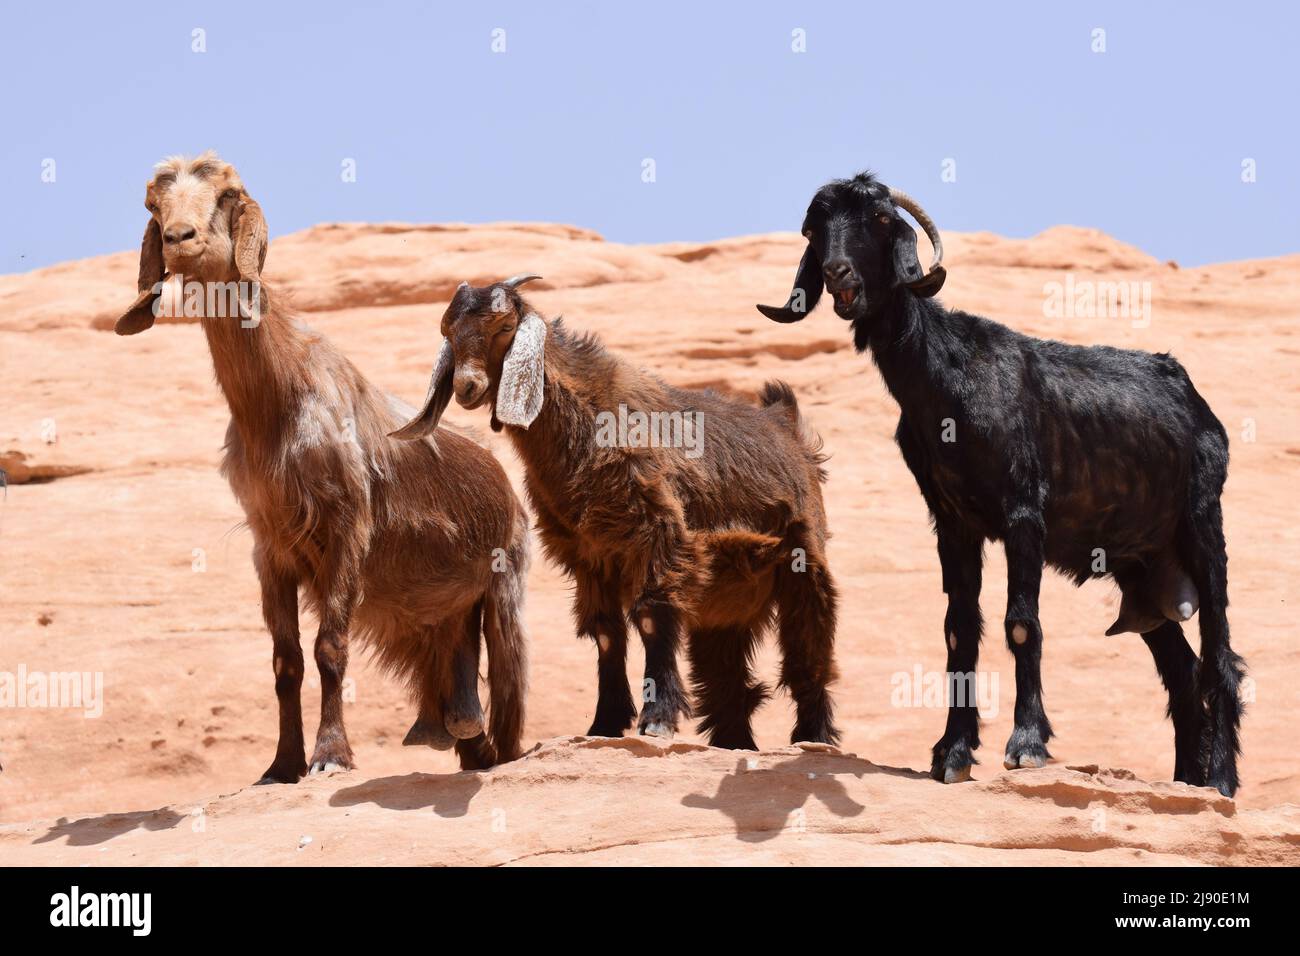 3 goats standing on high rocks Stock Photo